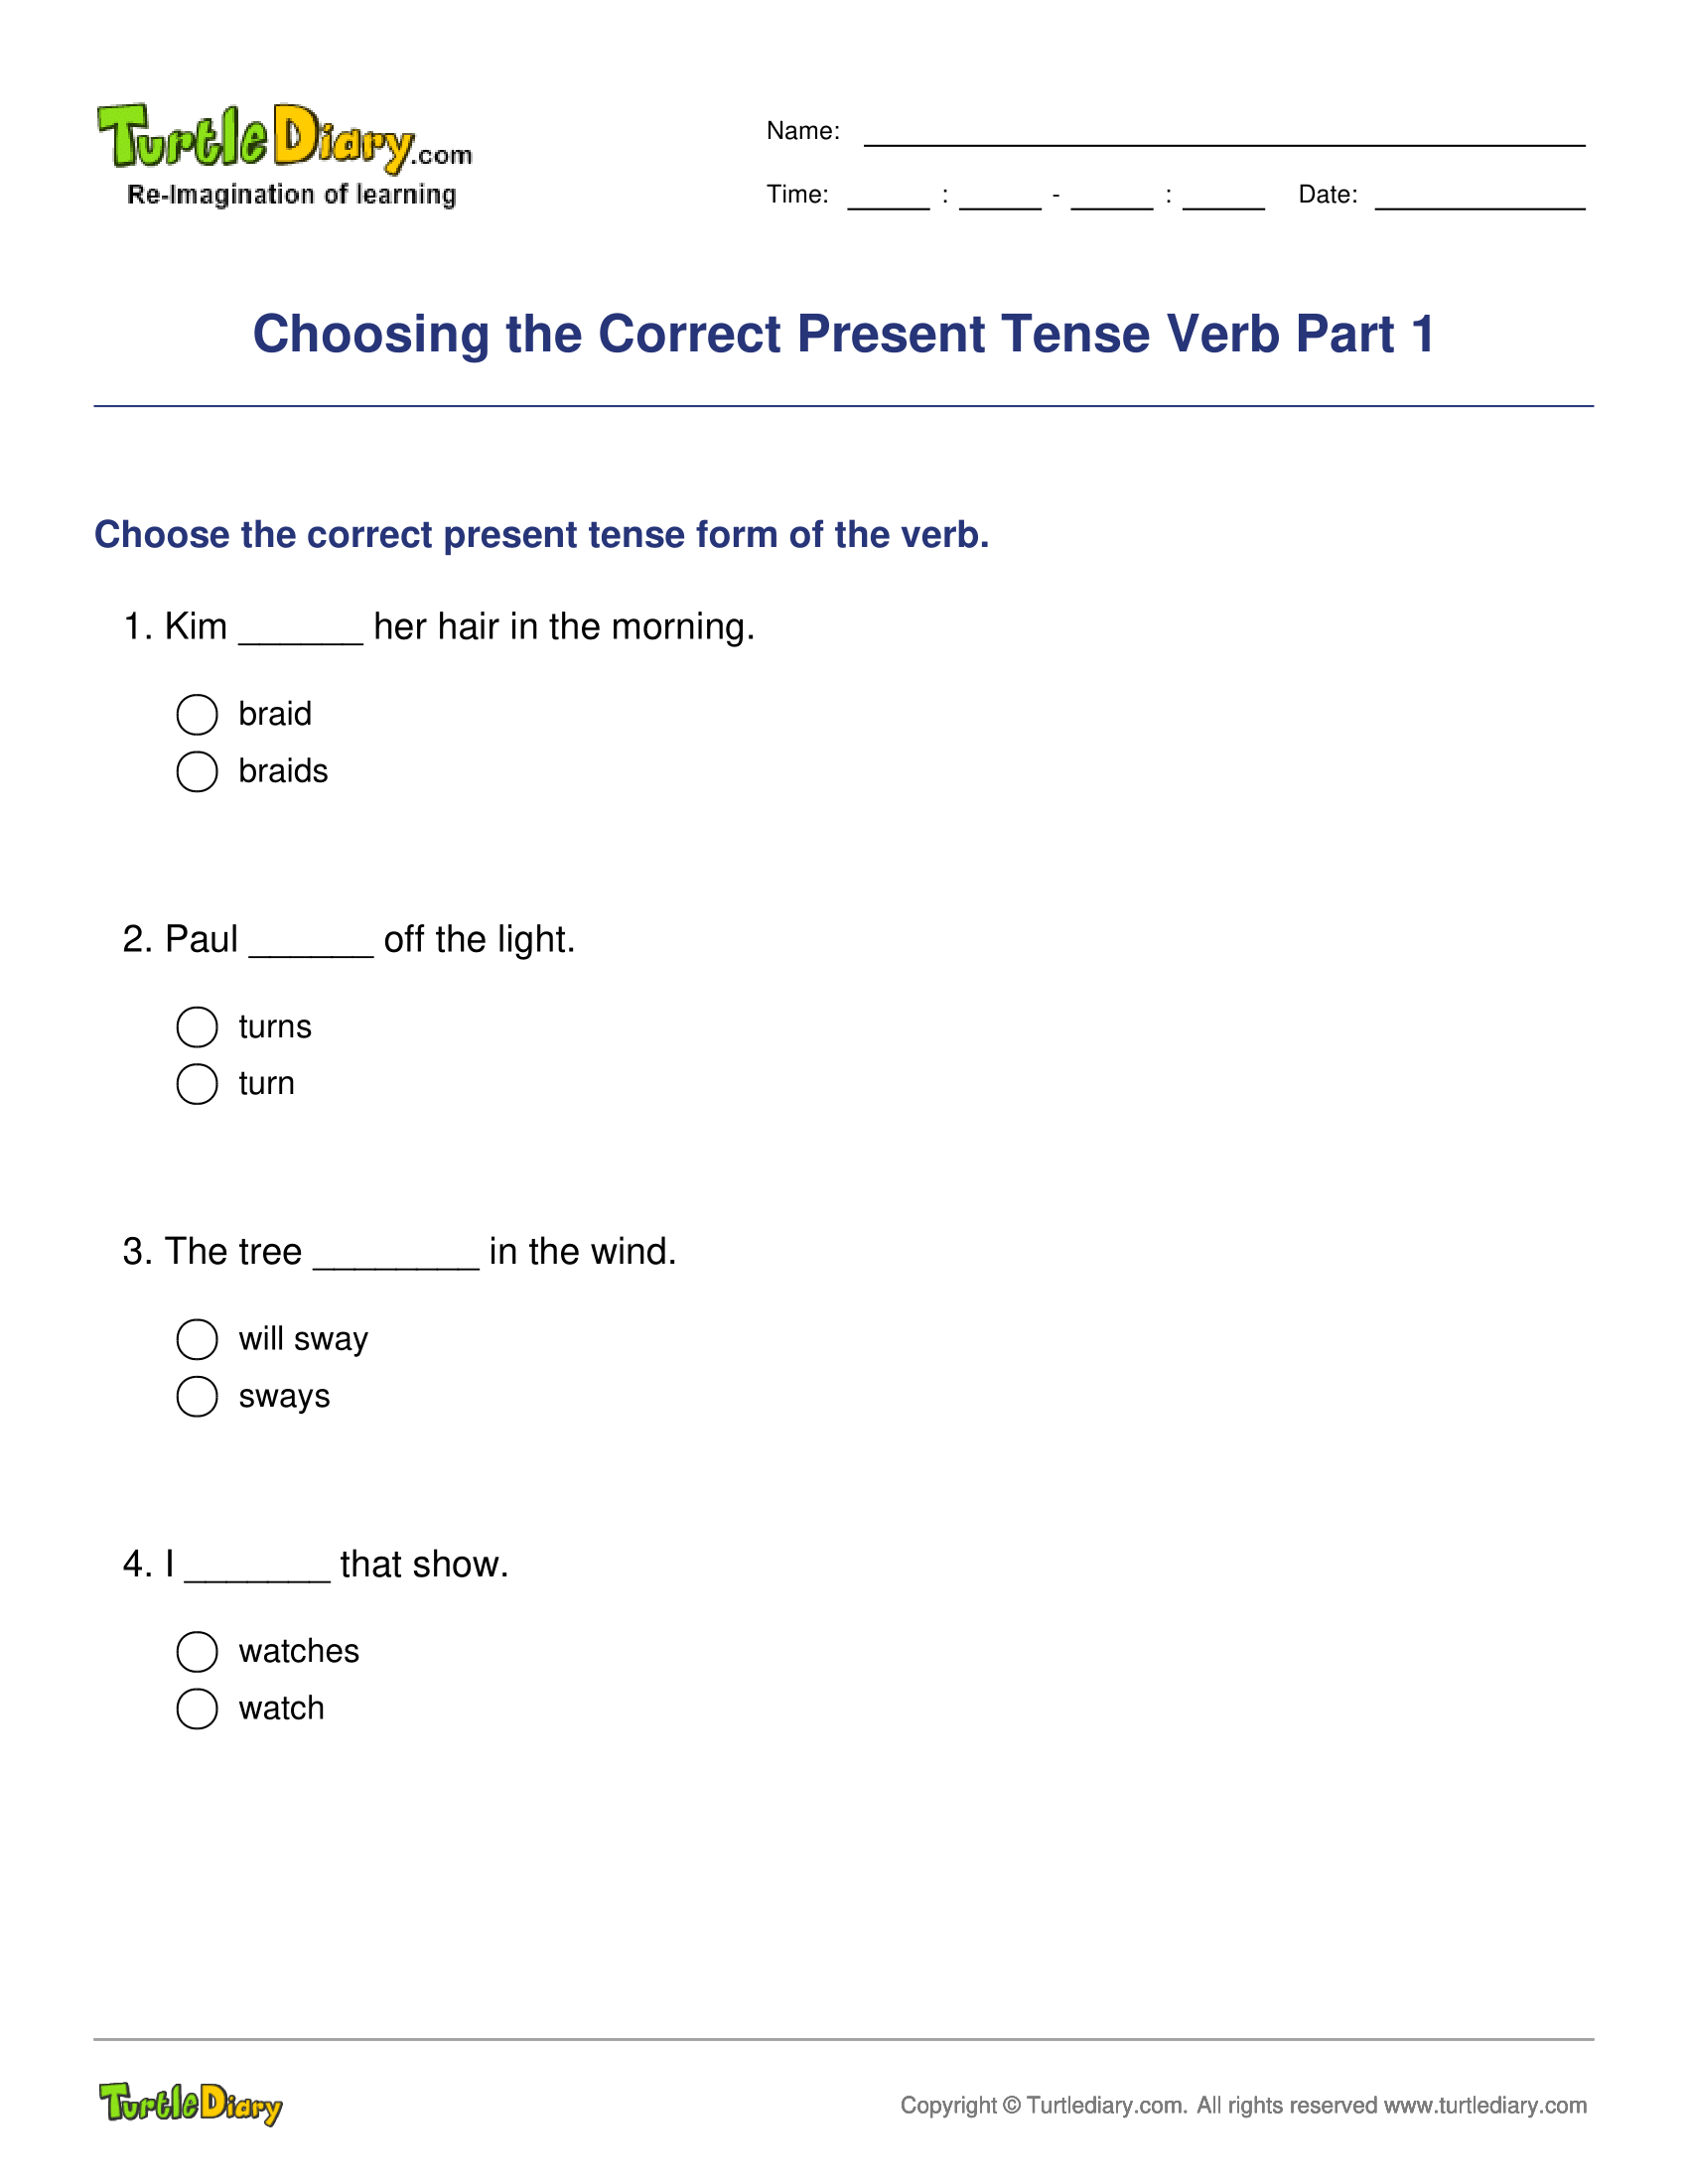 Choosing the Correct Present Tense Verb Part 1